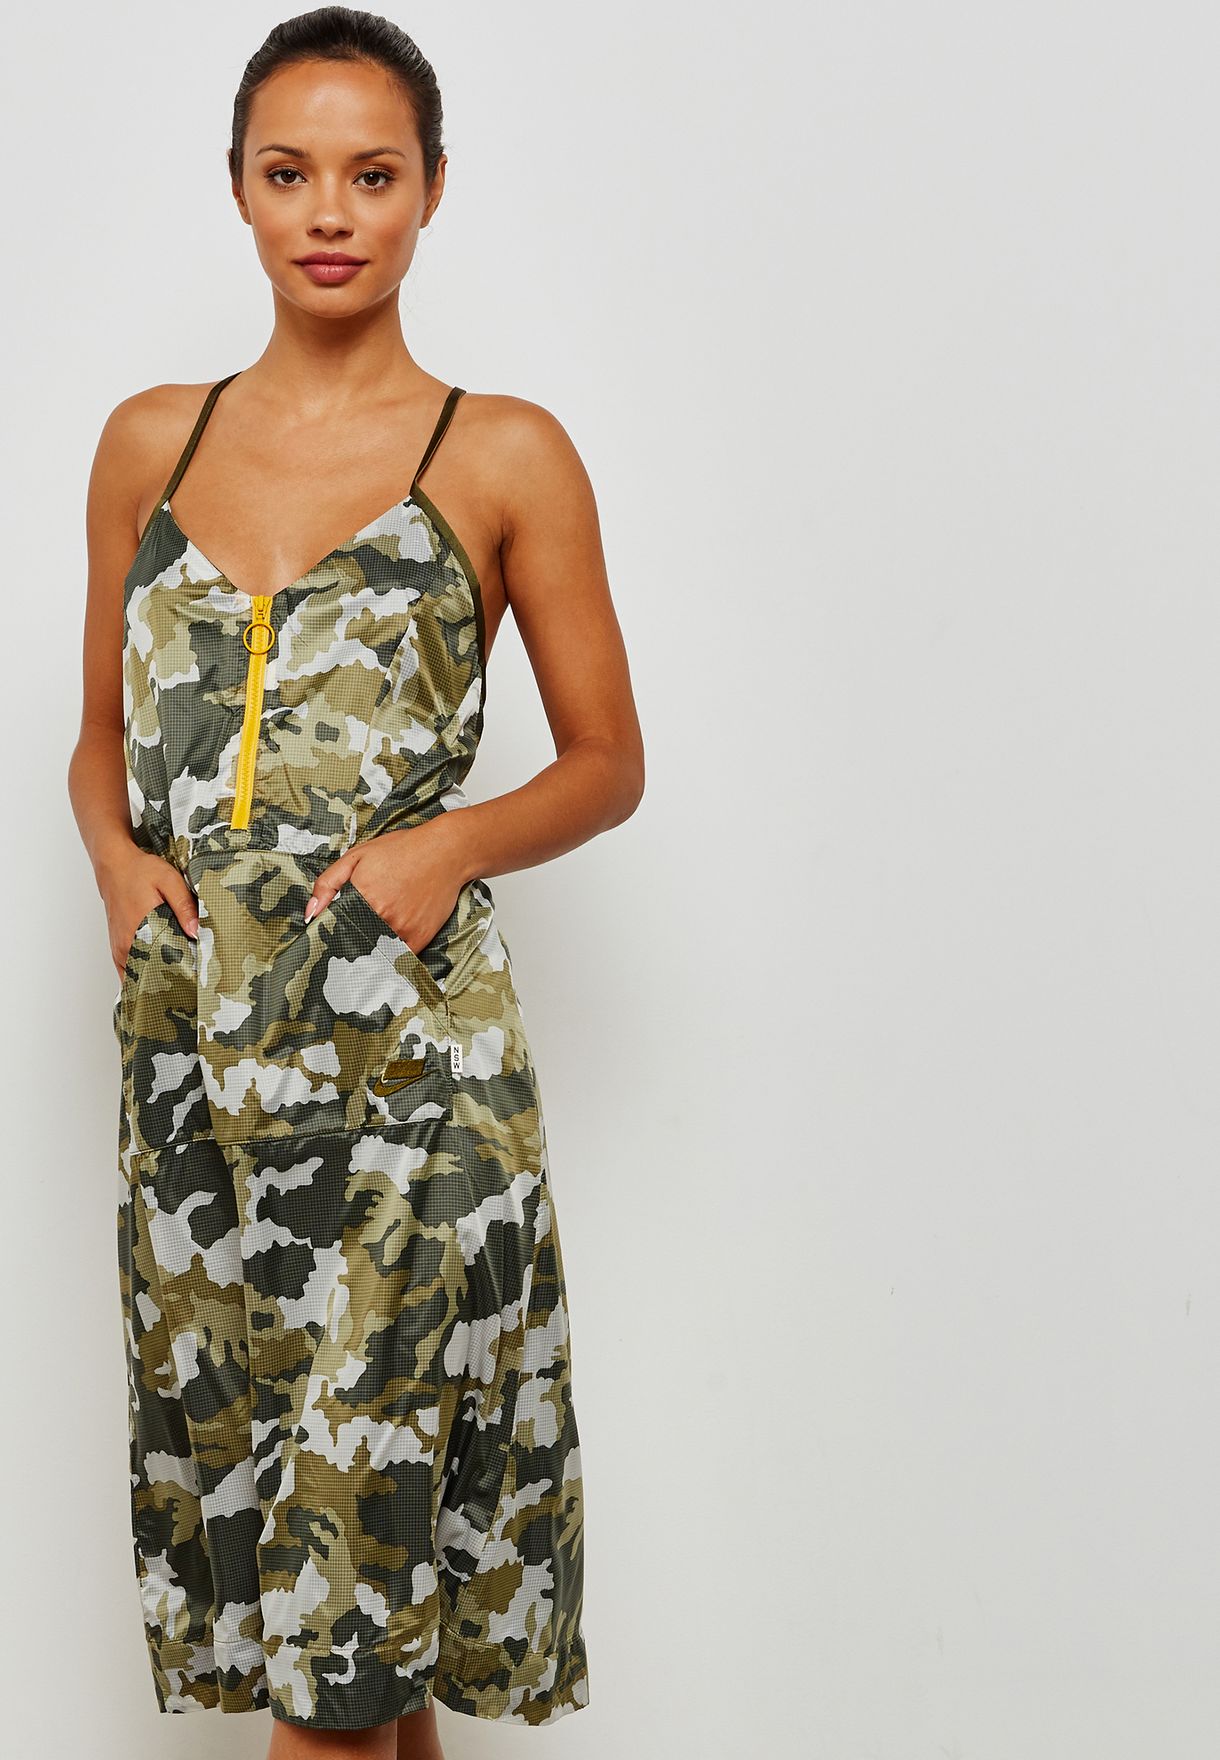 Buy Nike prints NSW Camo Dress for 